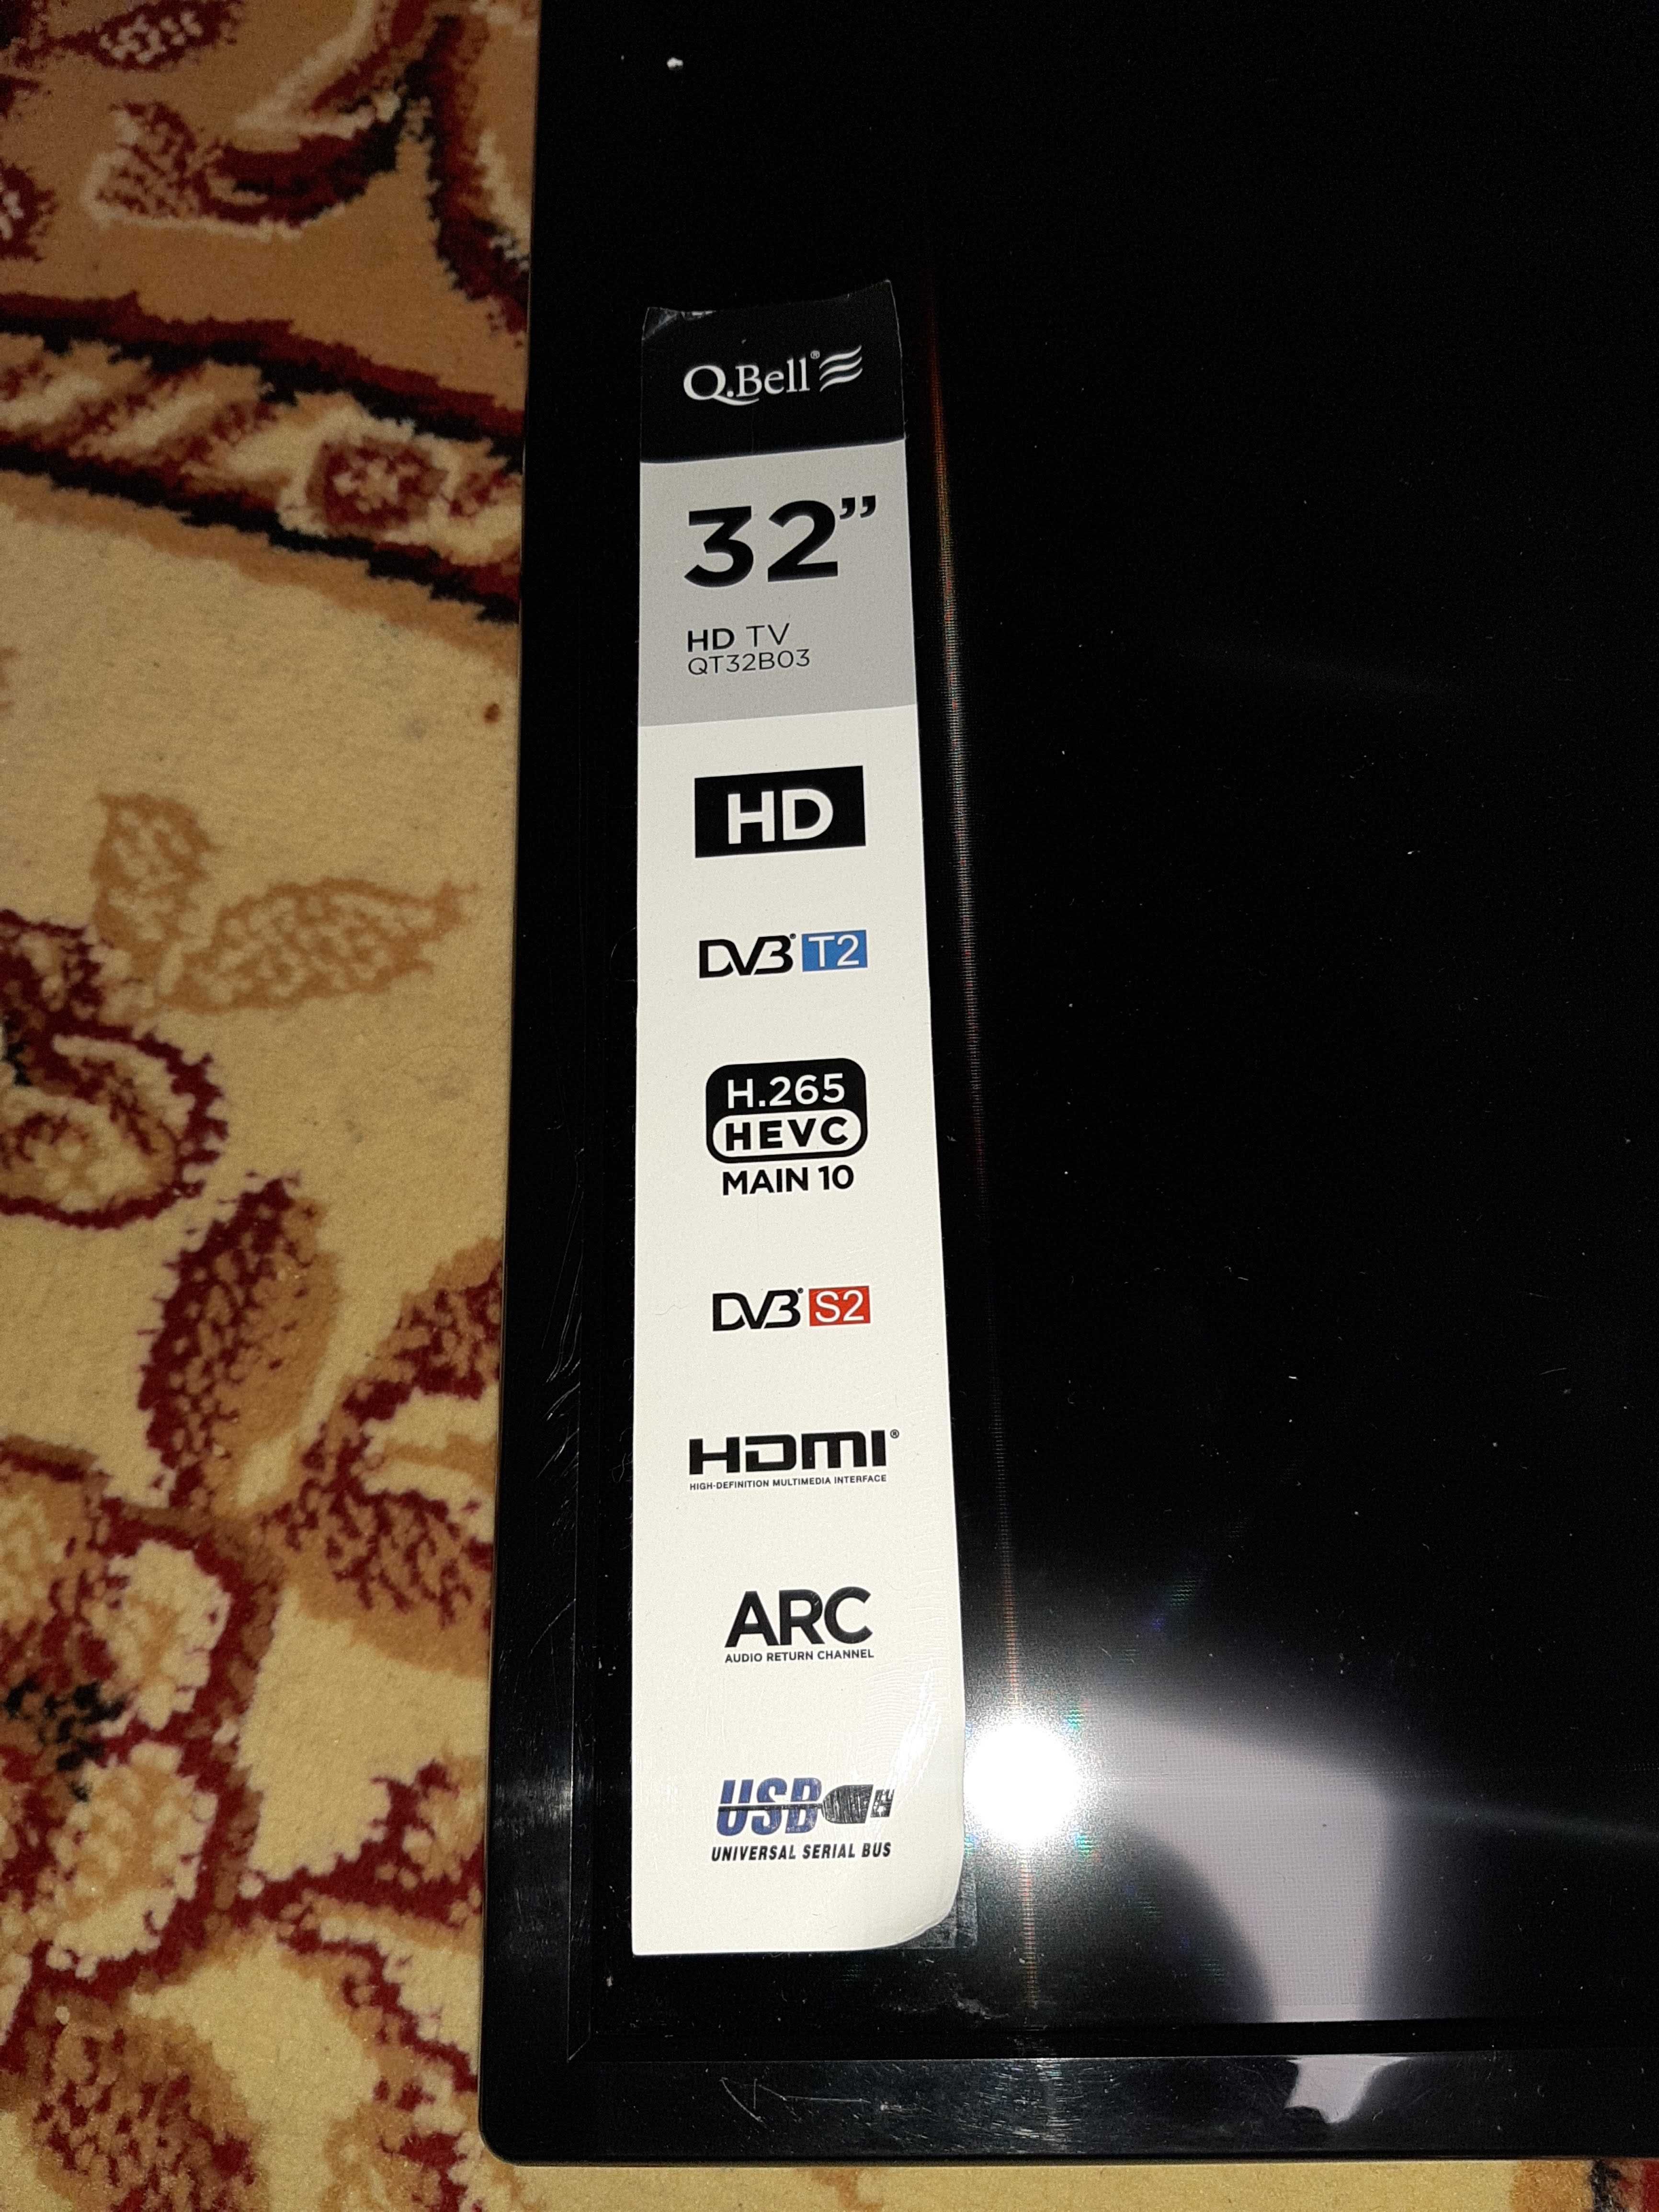 Телевизор Q.Bell QT32B03 32” HD READY DVB-T2/S2 HEVC MAIN 10